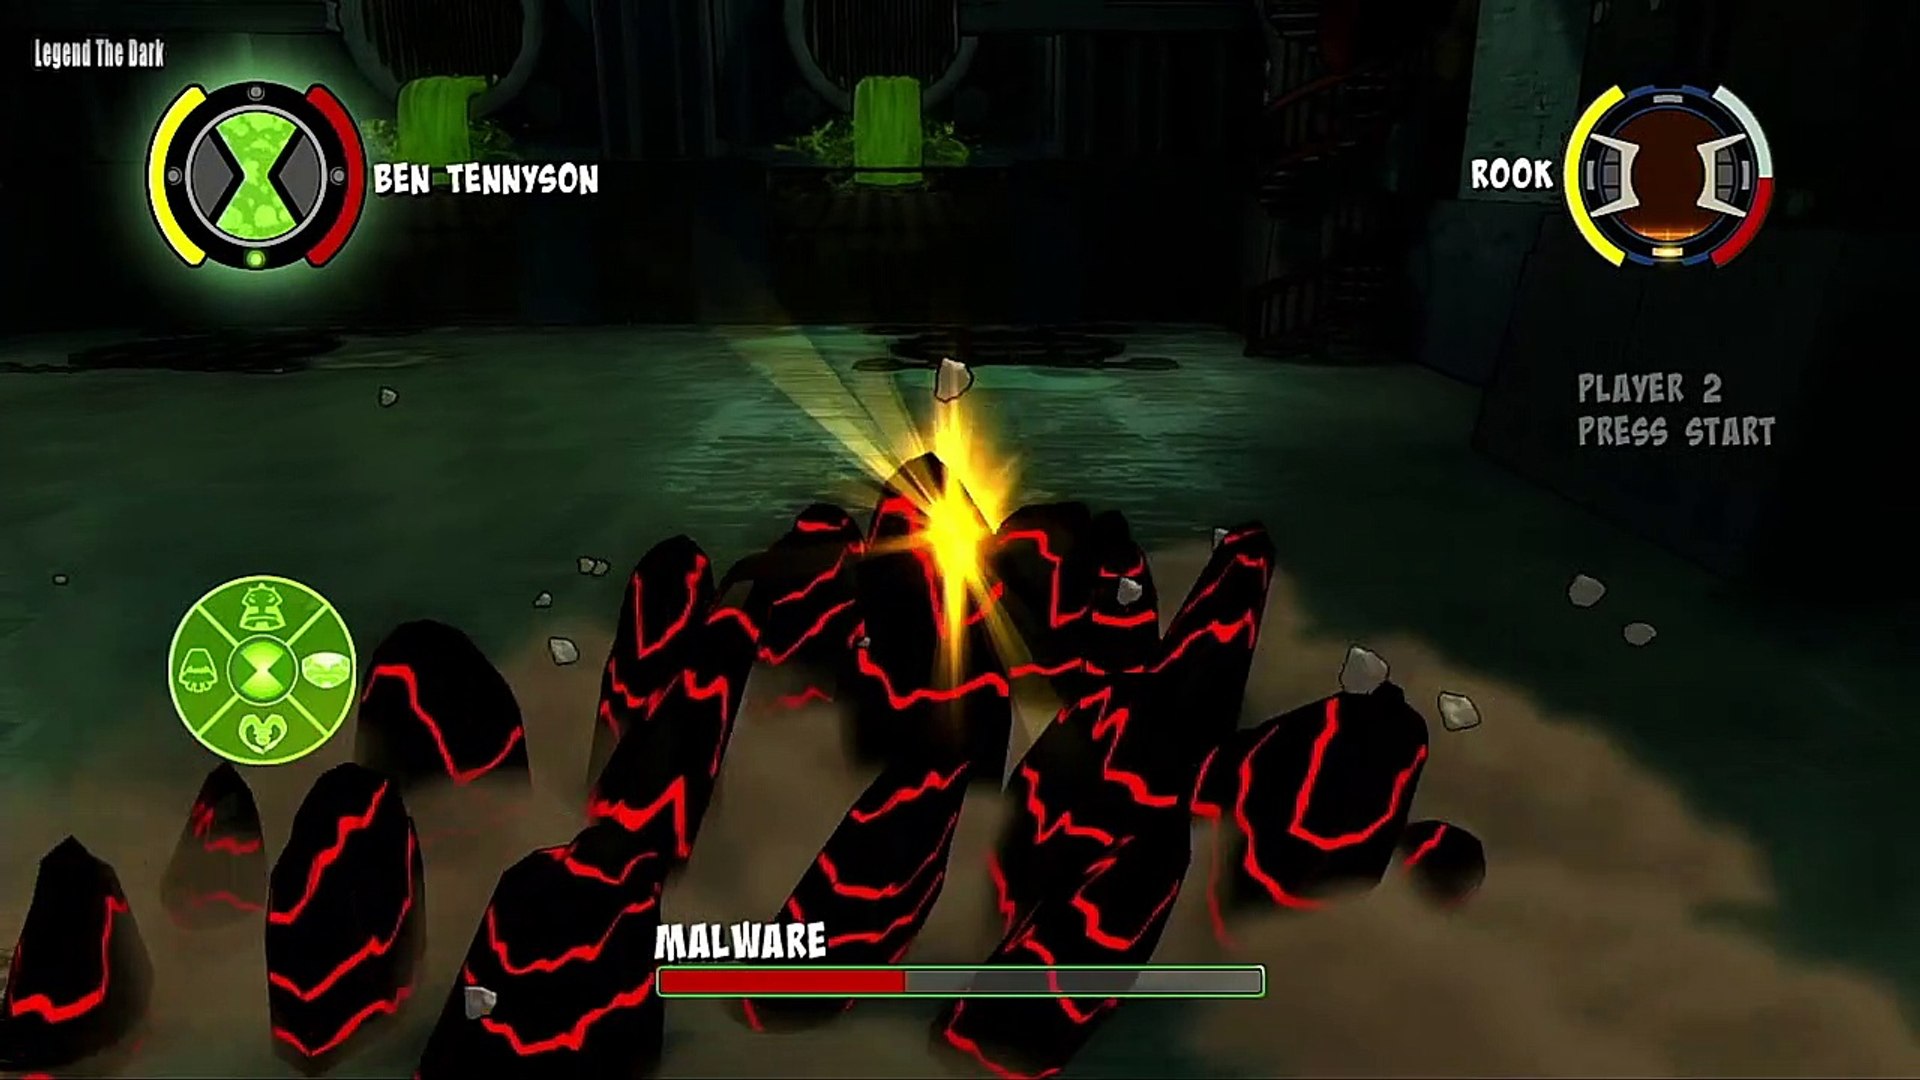 Cartoon Network Games: Ben 10 Omniverse Games Alien Unlock 2 - video  Dailymotion